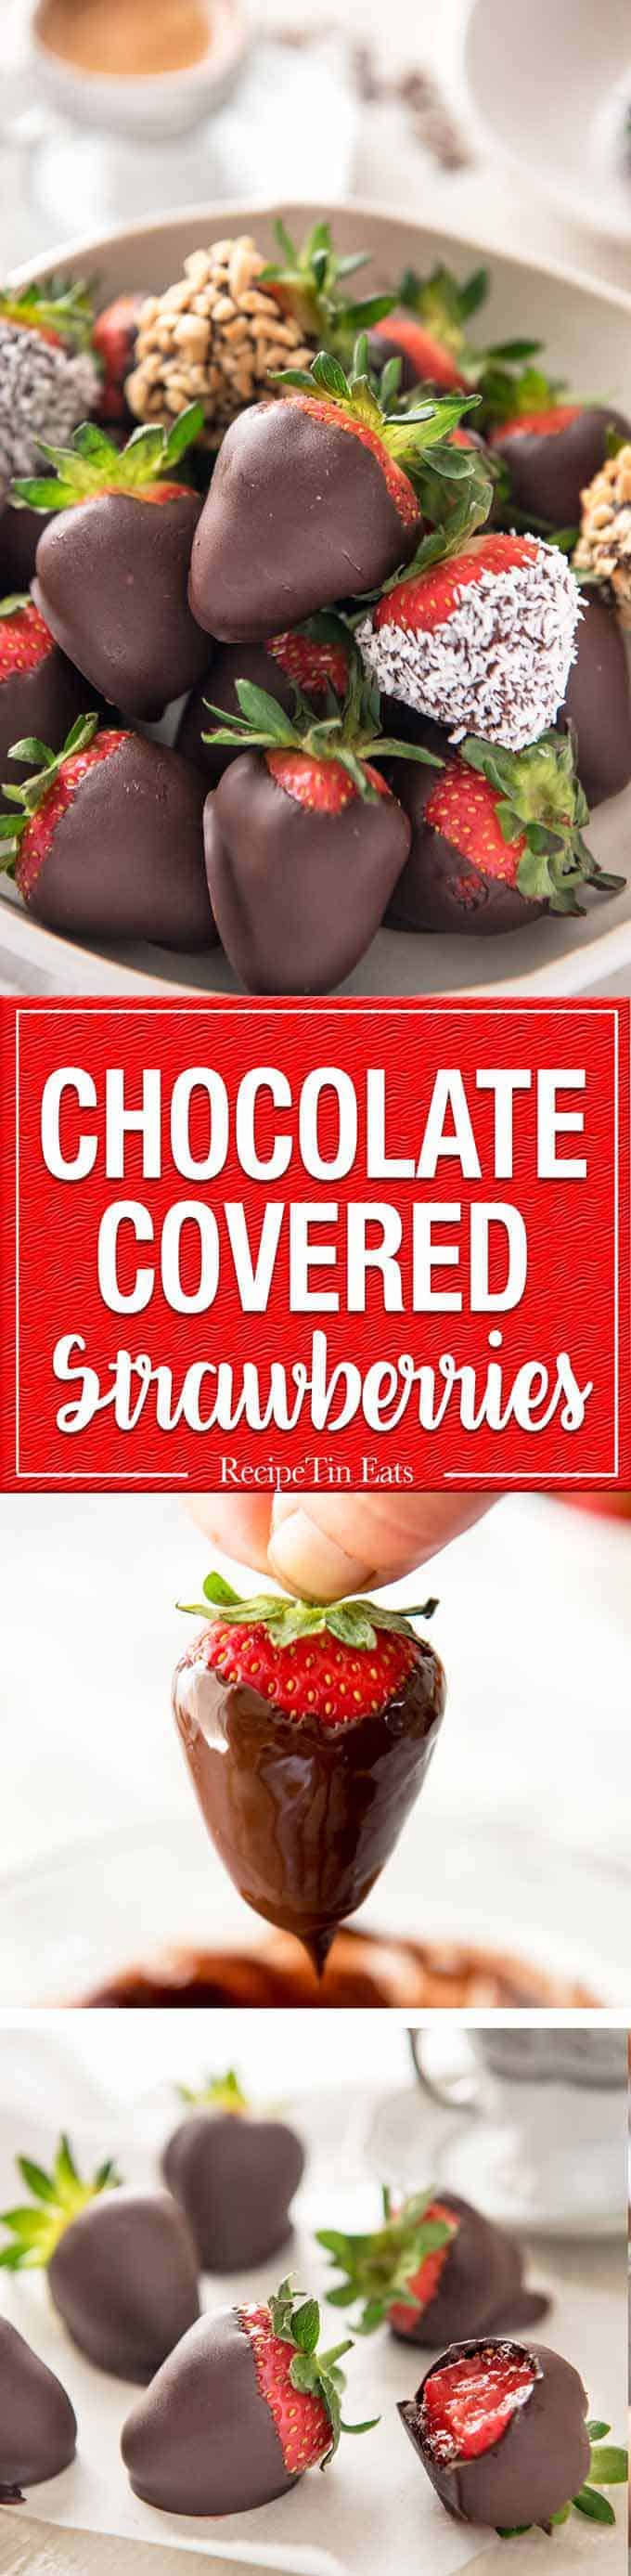 Chocolate Covered Strawberries 3 Ingredient Dessert Recipetin Eats,Ogre Designers Edition